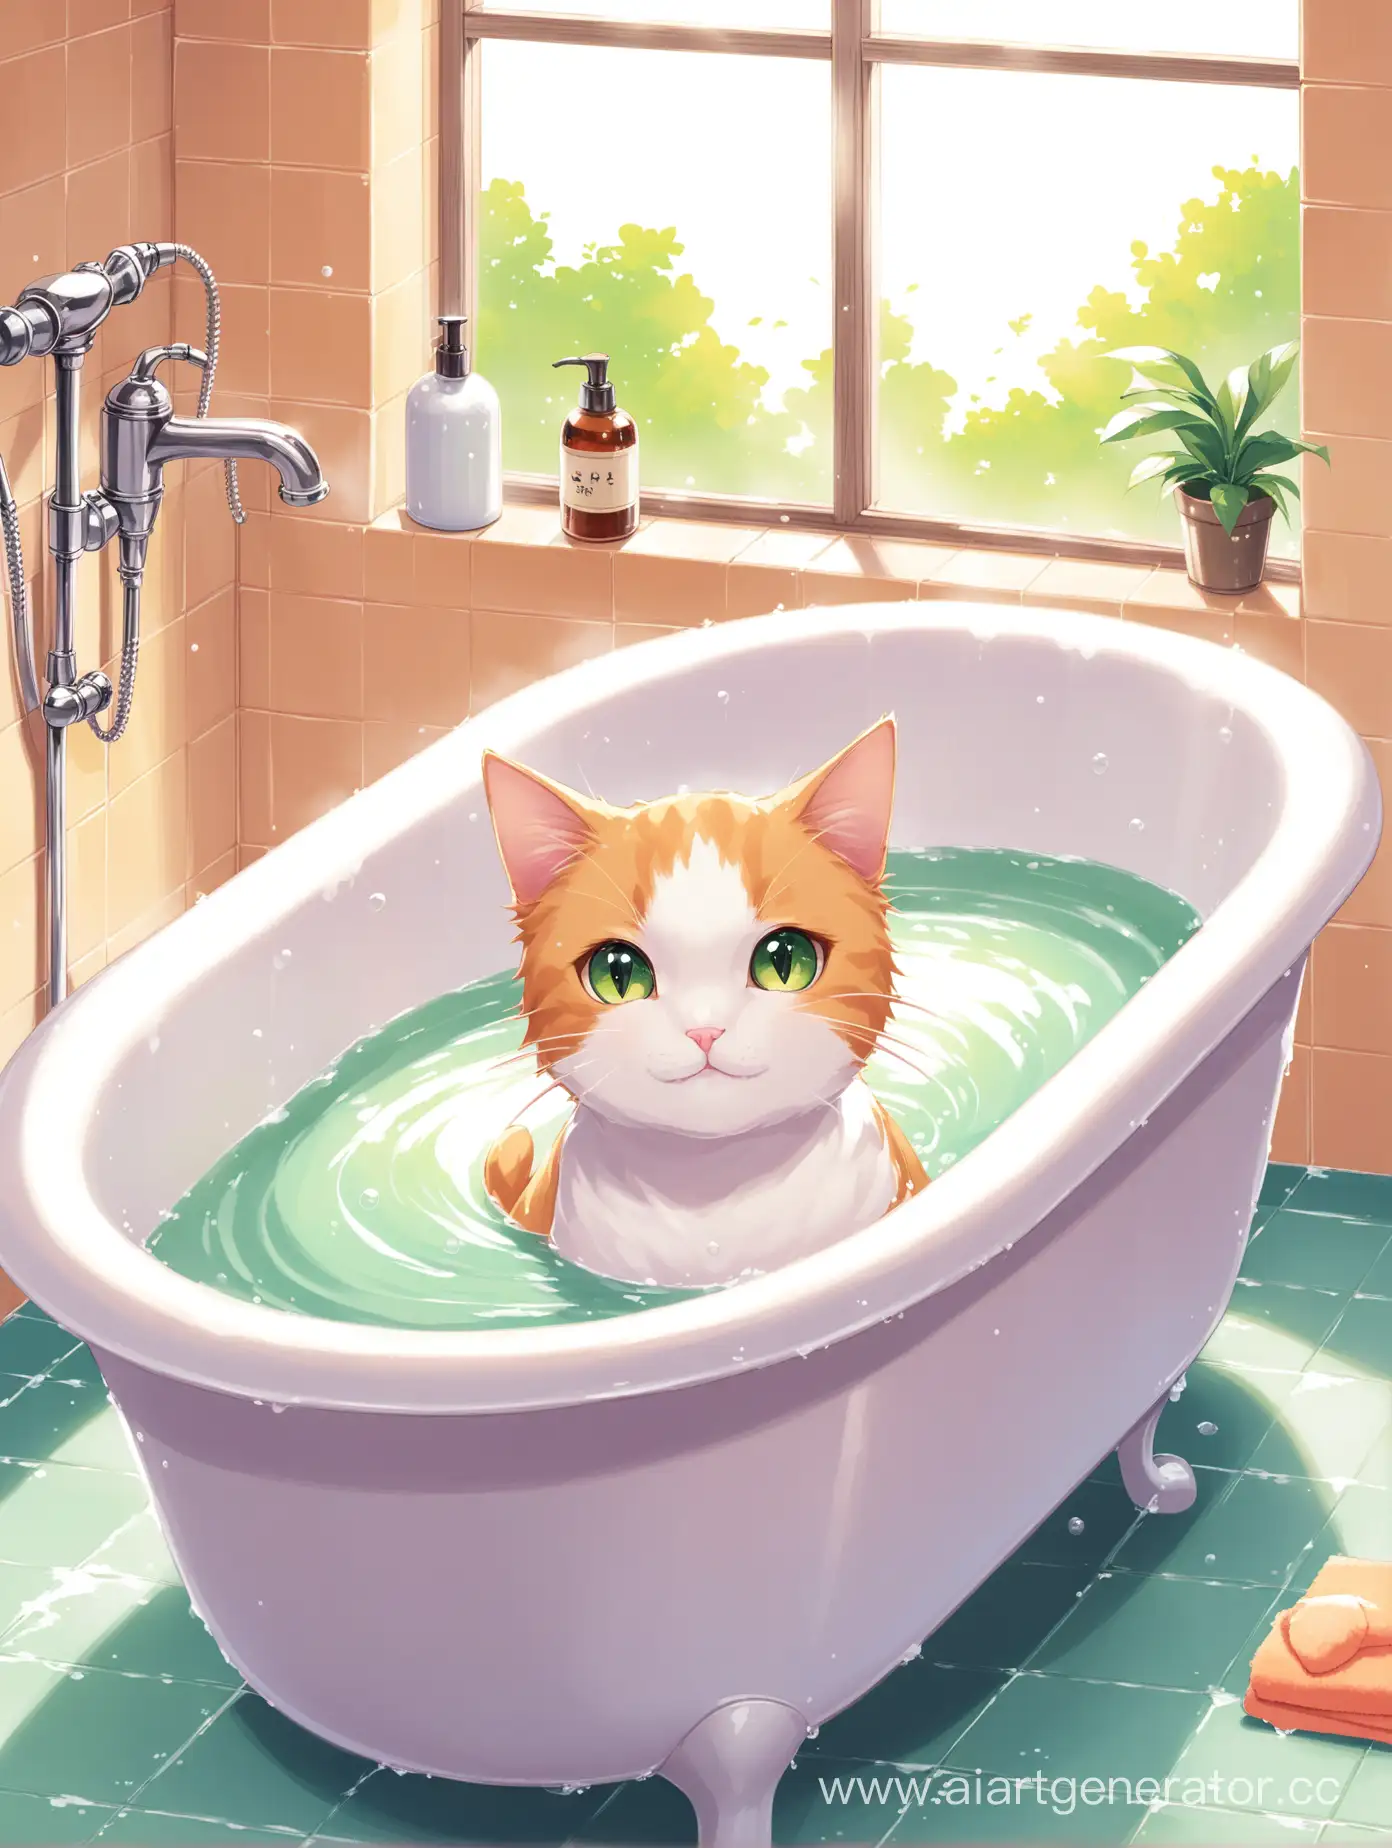 Playful-Cat-Enjoying-a-Relaxing-Bath